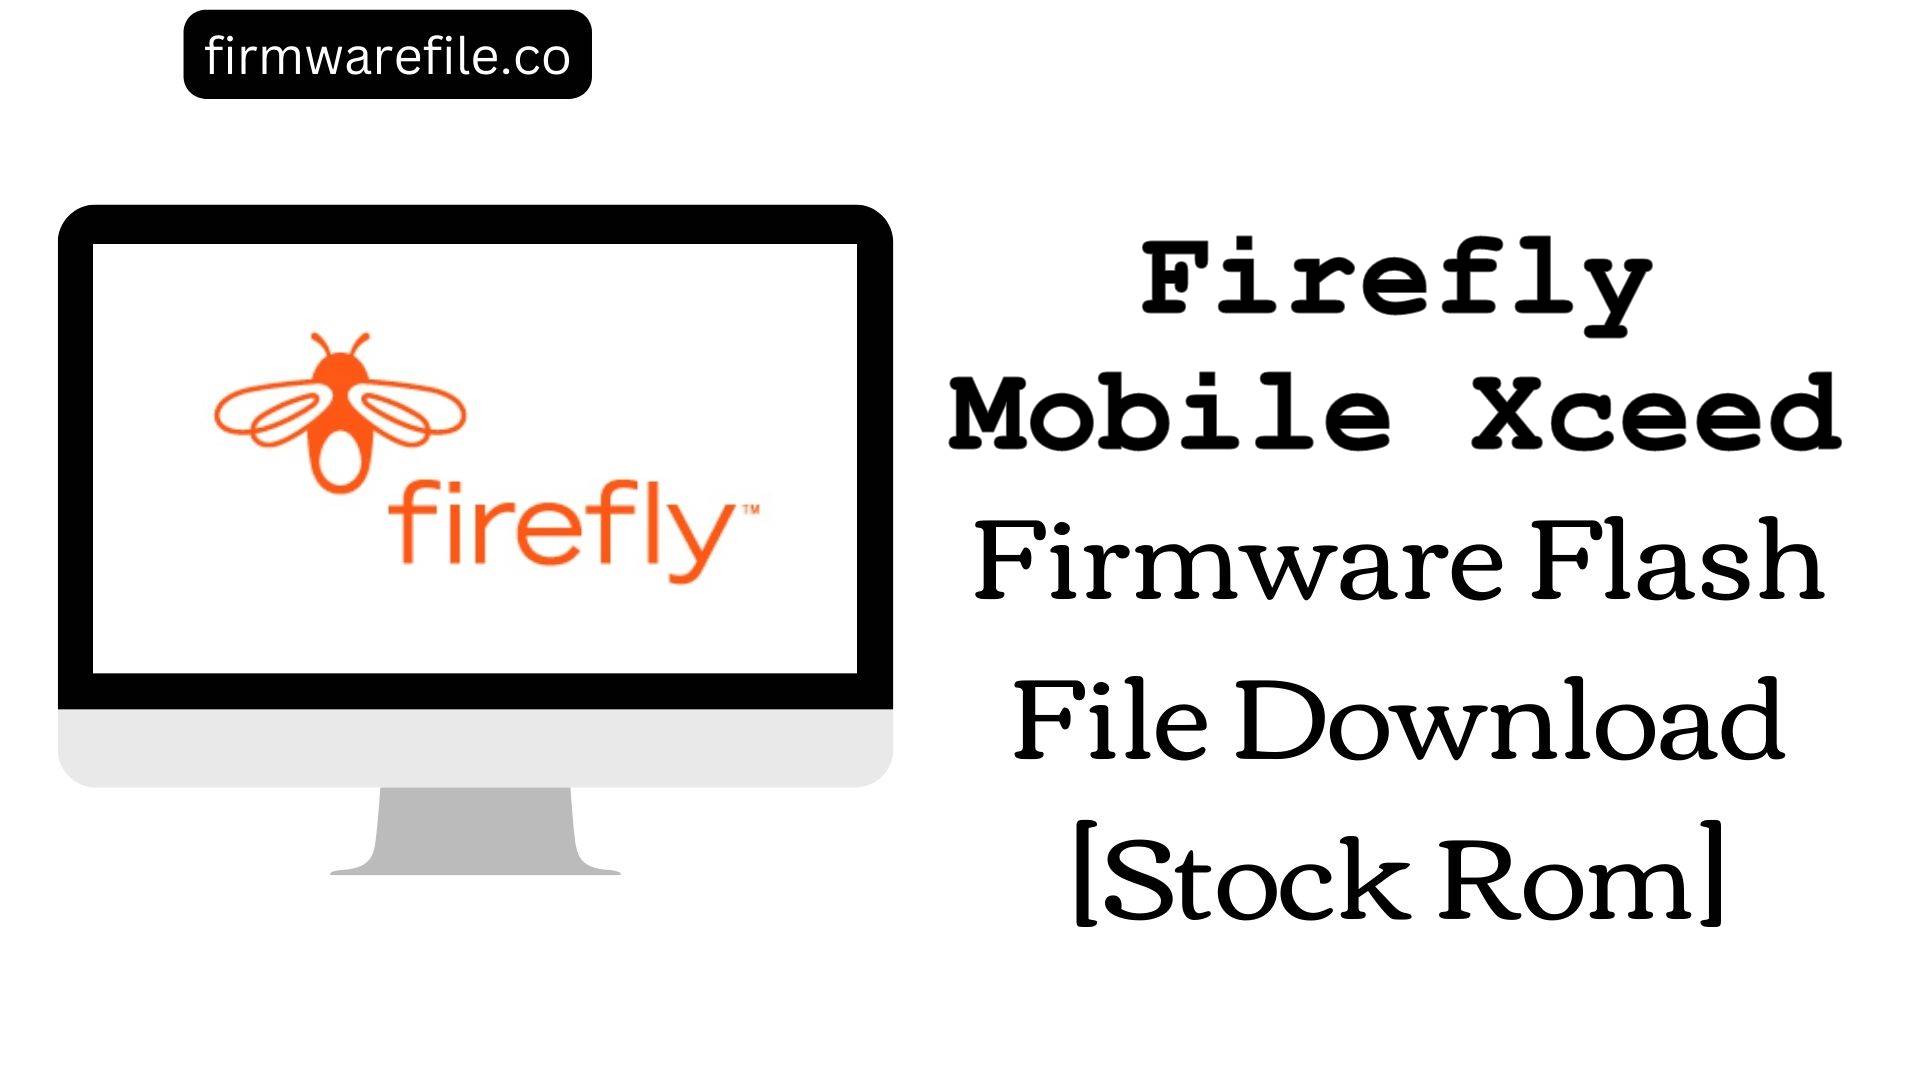 Firefly Mobile Xceed